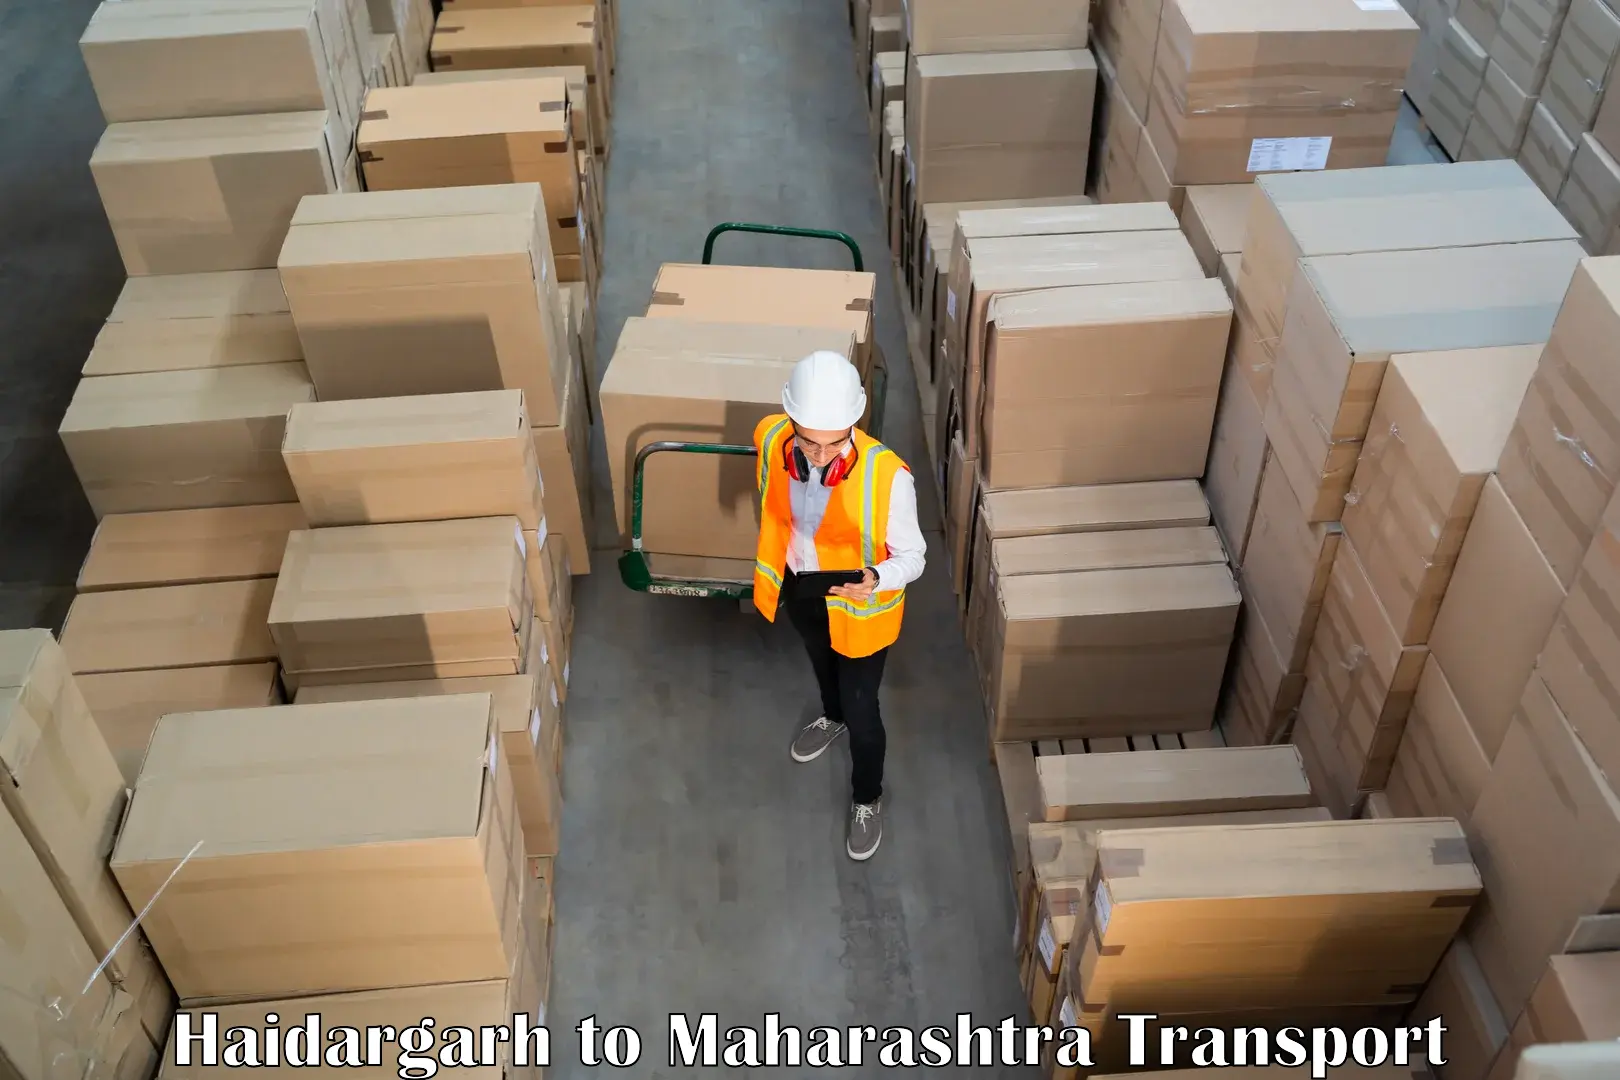 Truck transport companies in India Haidargarh to Indapur